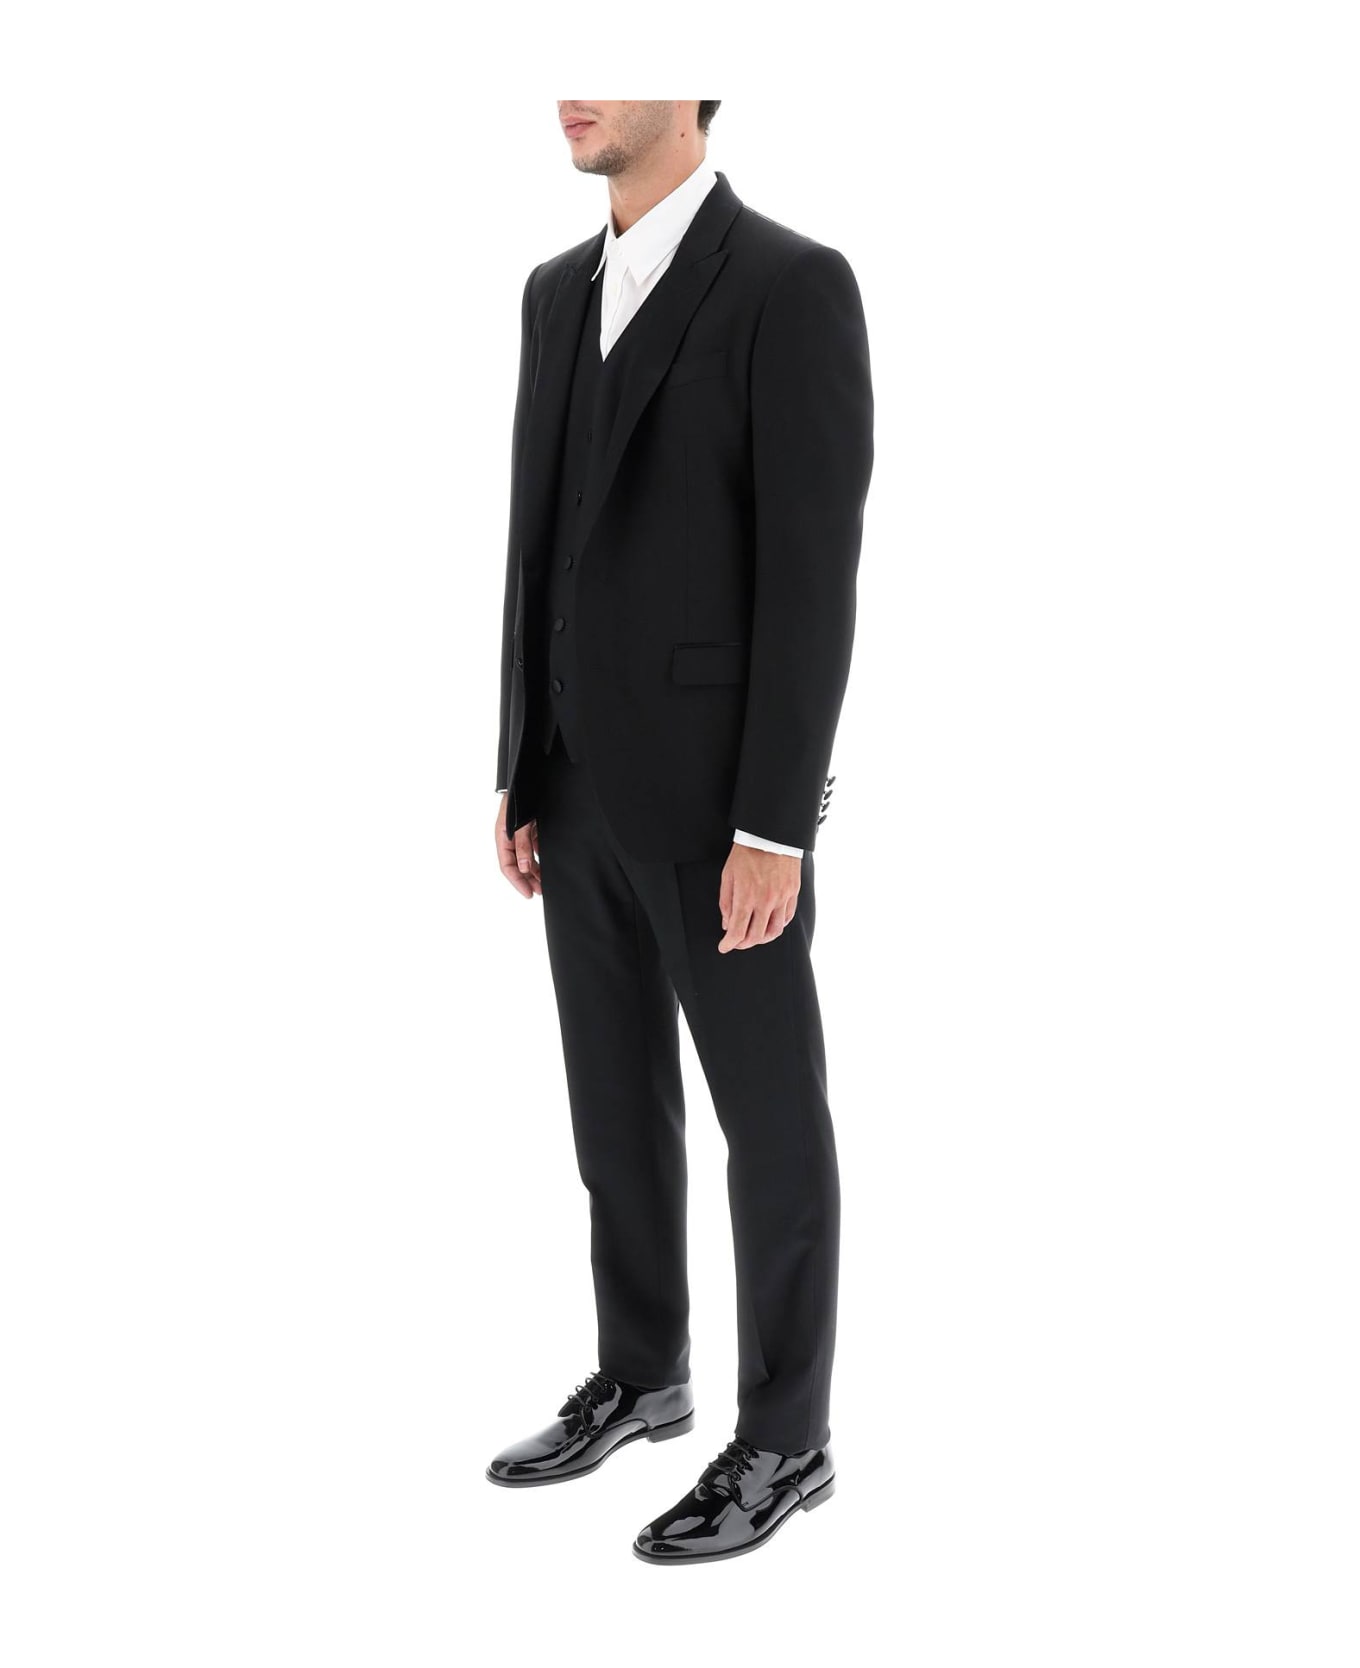 Dolce & Gabbana Martini Fit Tuxedo Suit - Black スーツ